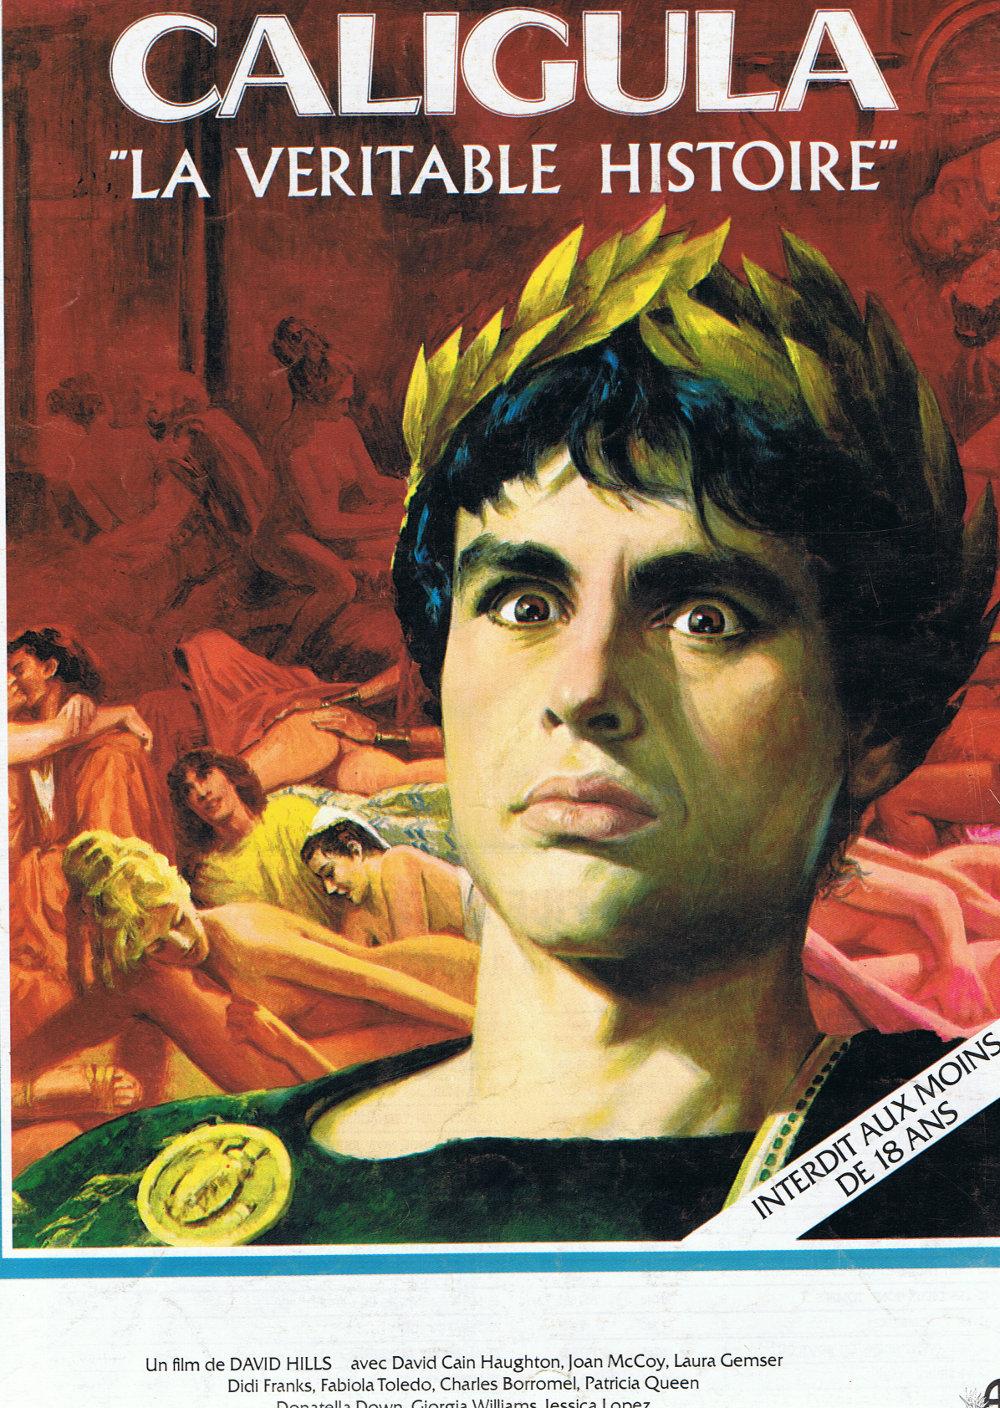 The Emperor Caligula: The Untold Story 1982 - IMDb